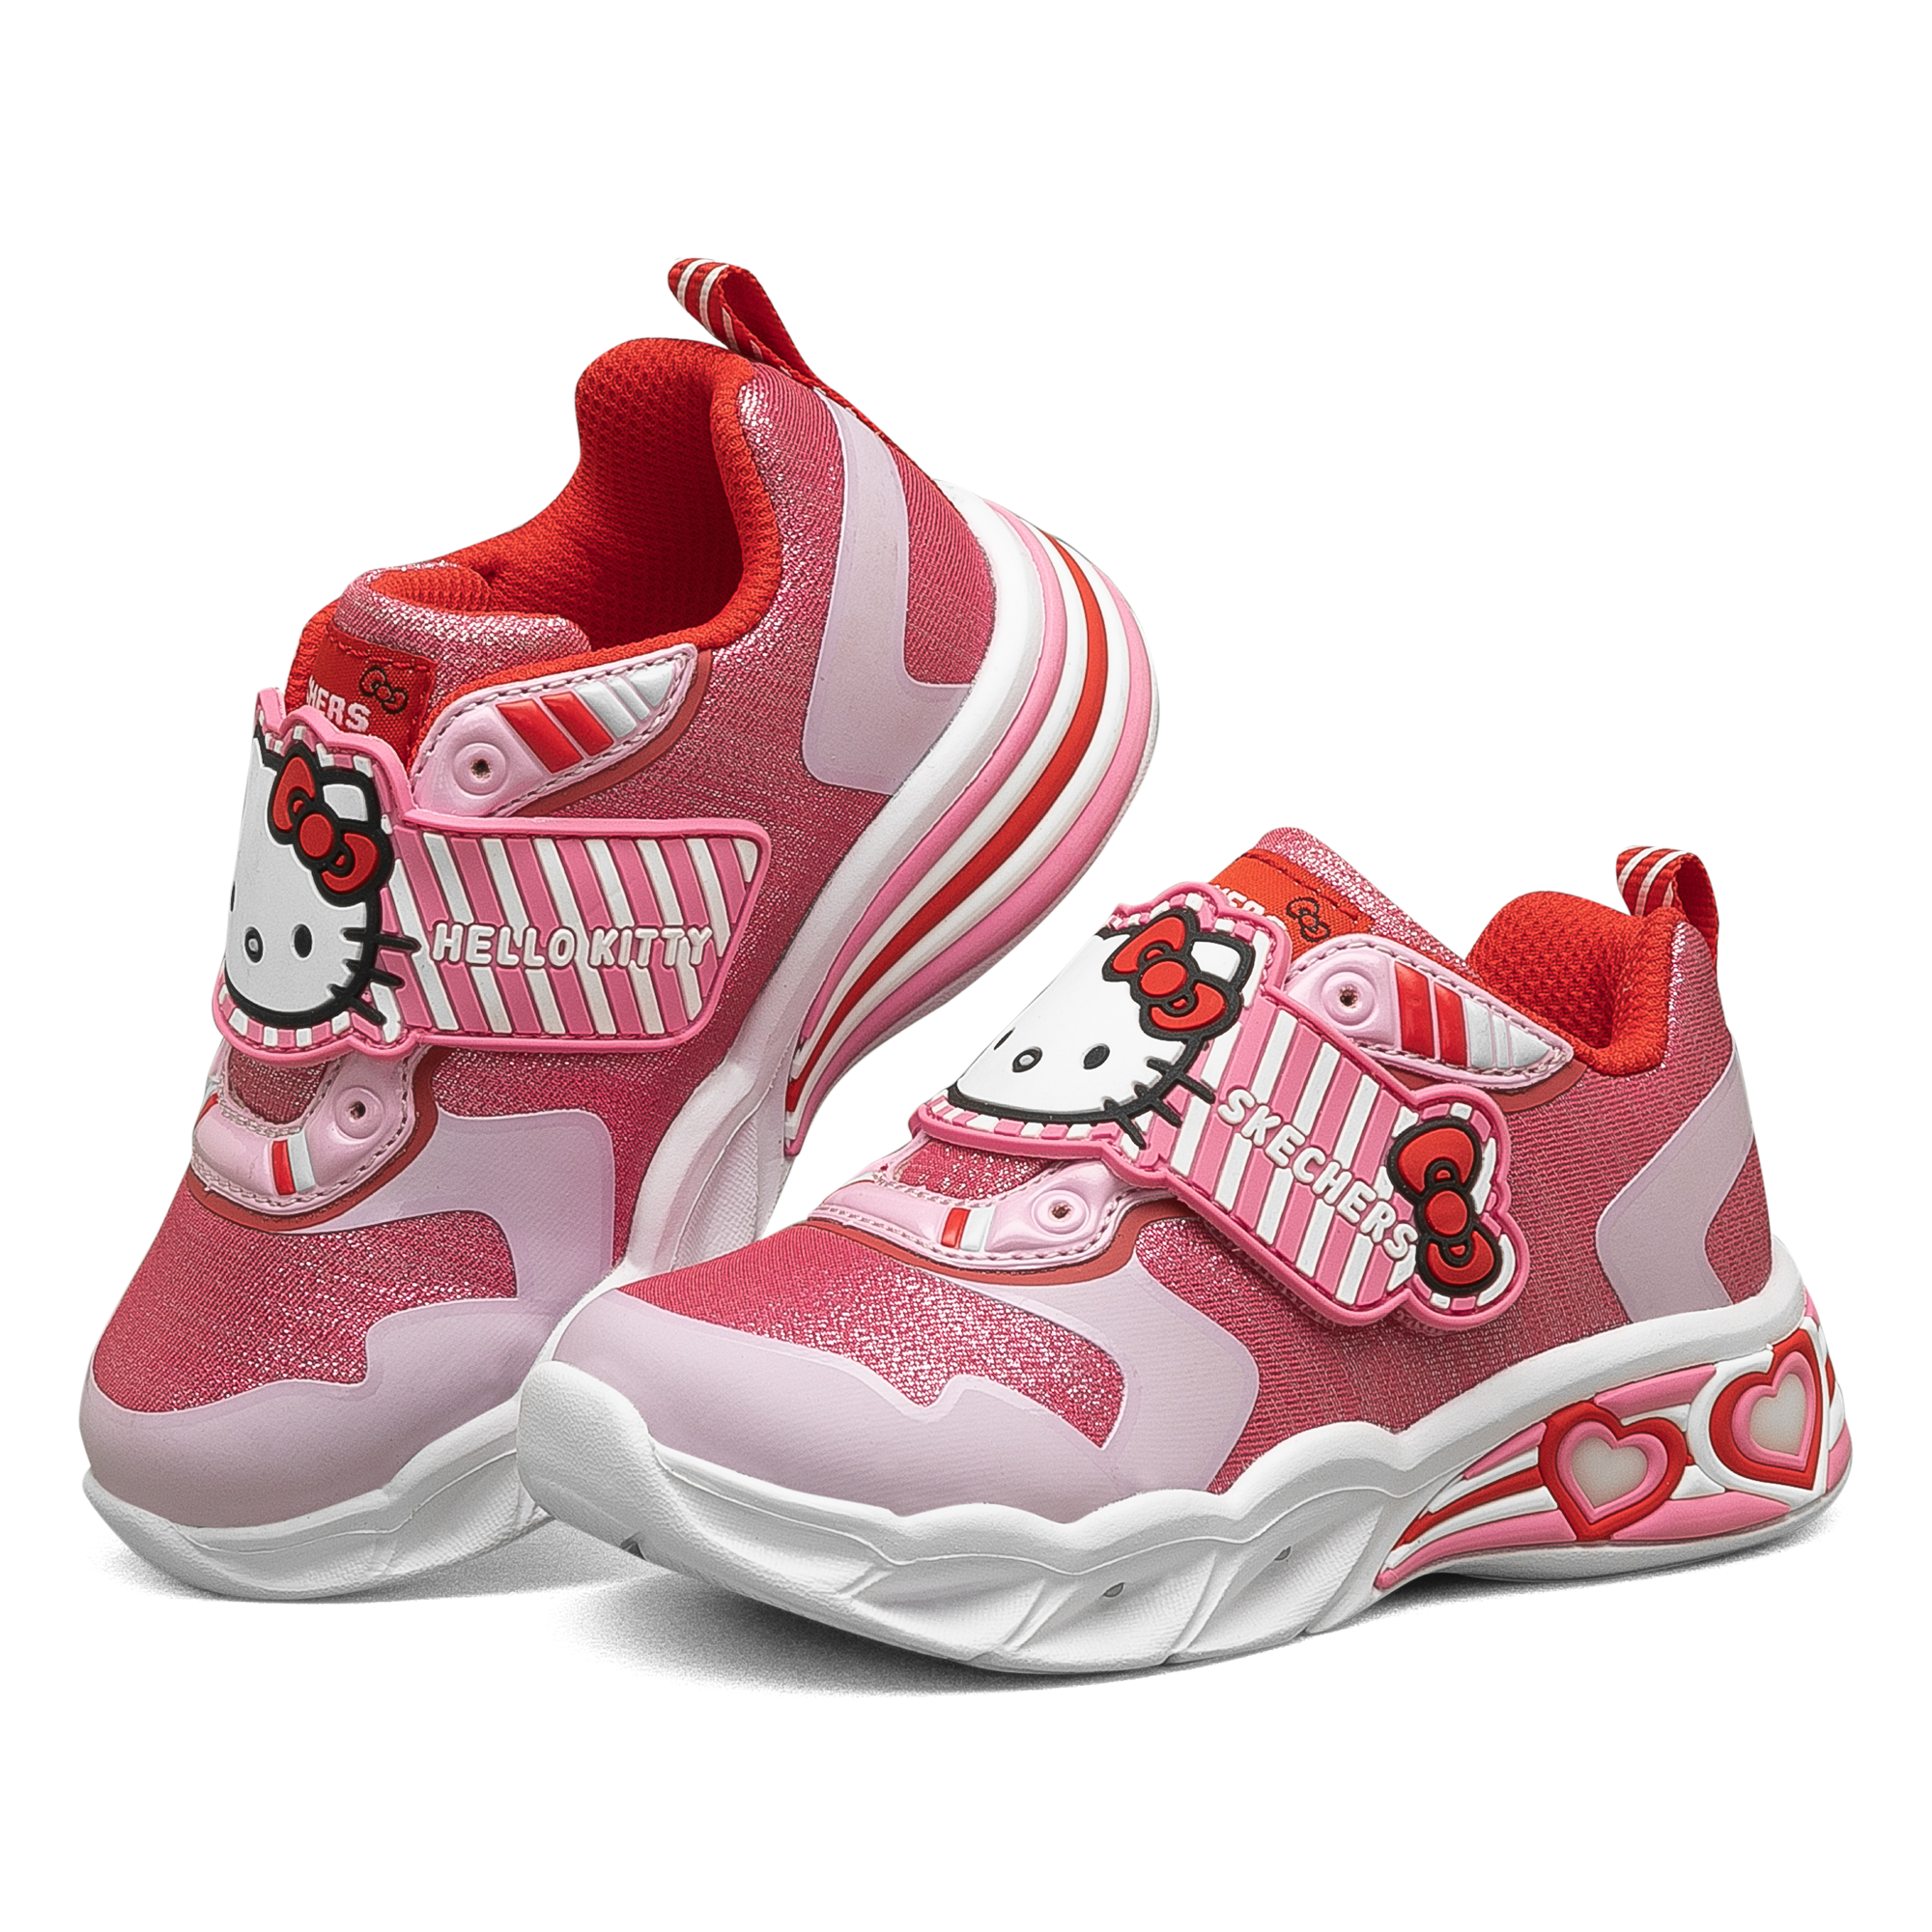 Skechers S'pore launches Hello Kitty 